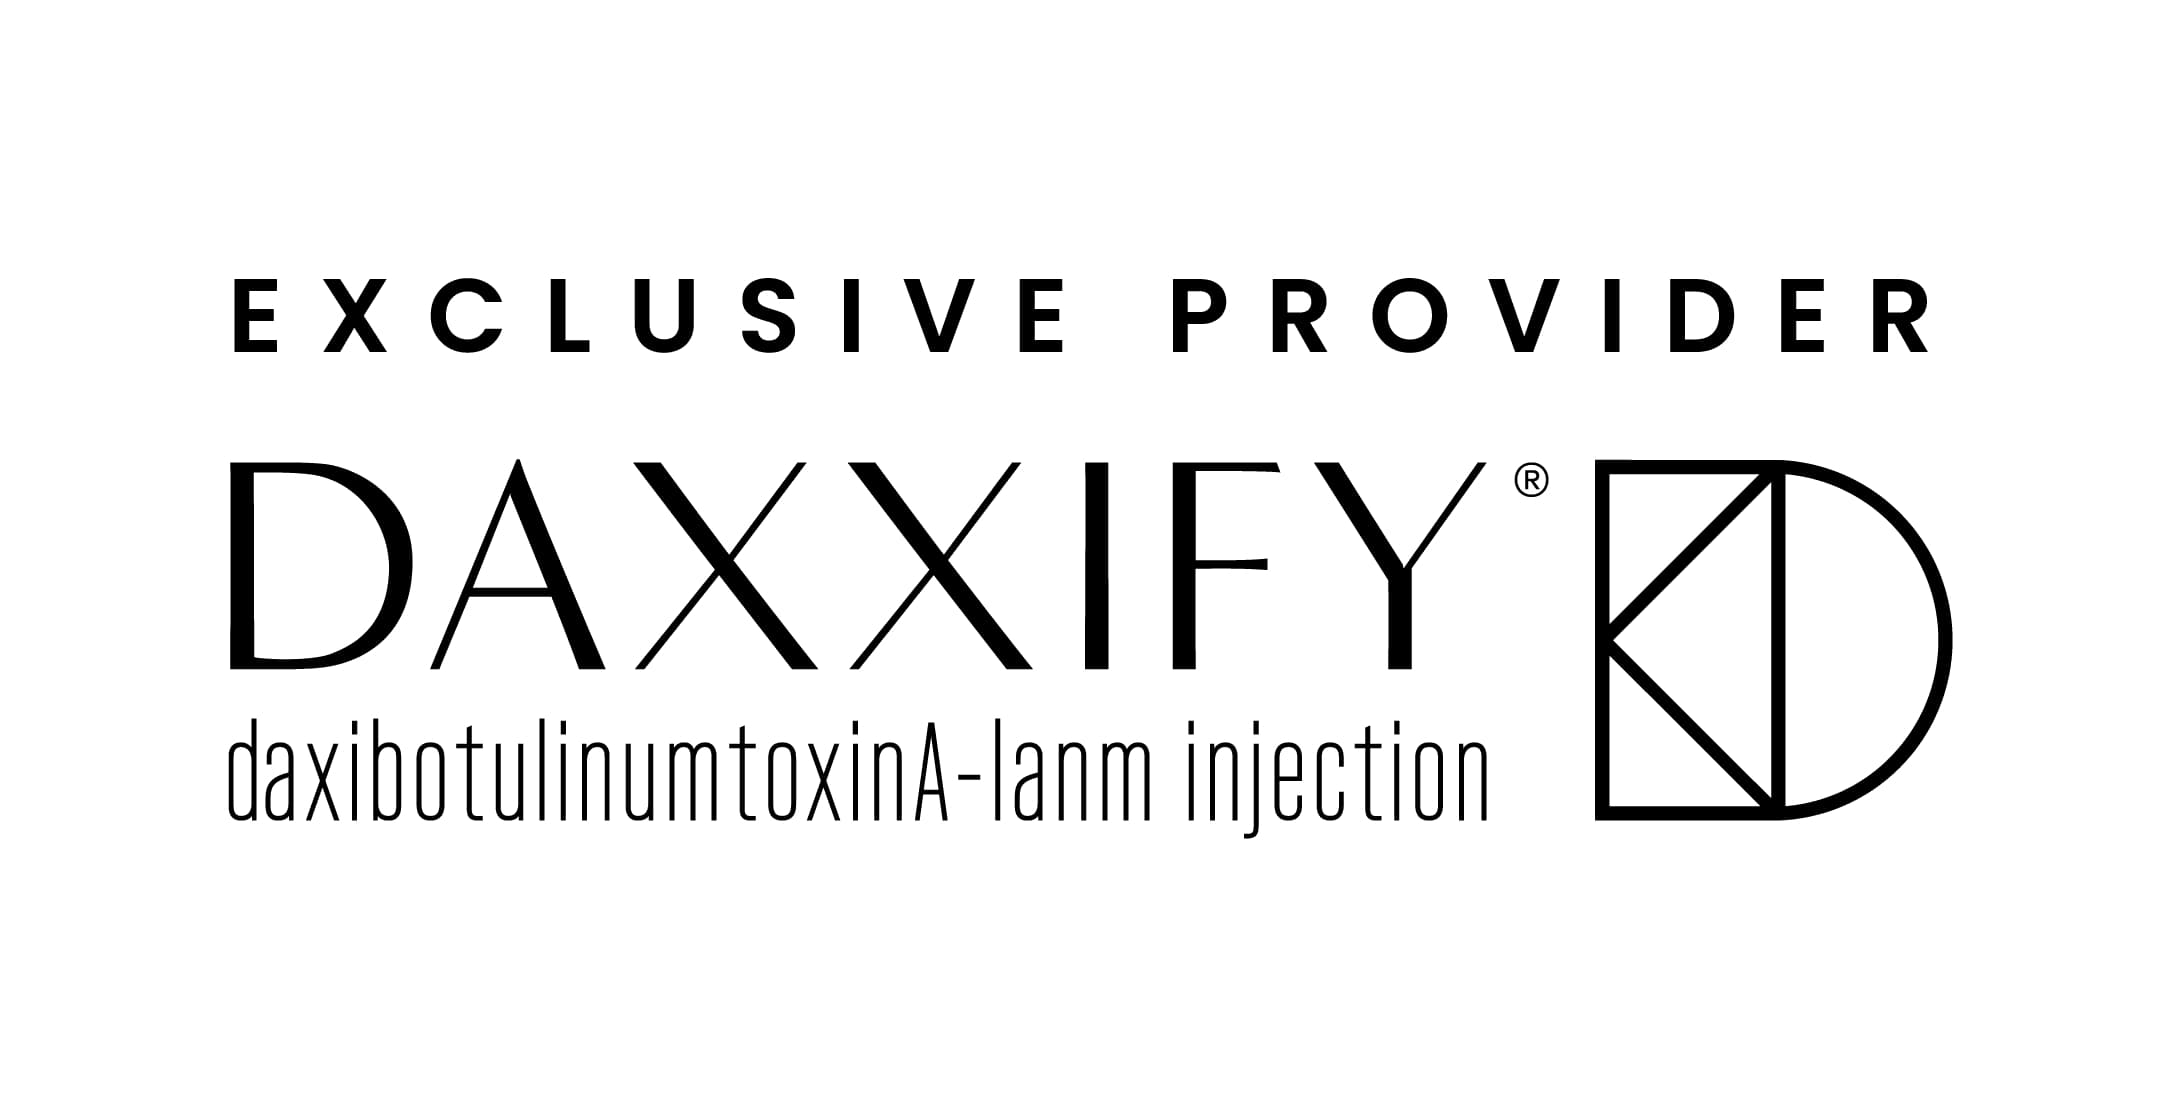 DAXXIFY Exclusive Provider Logo Black 1